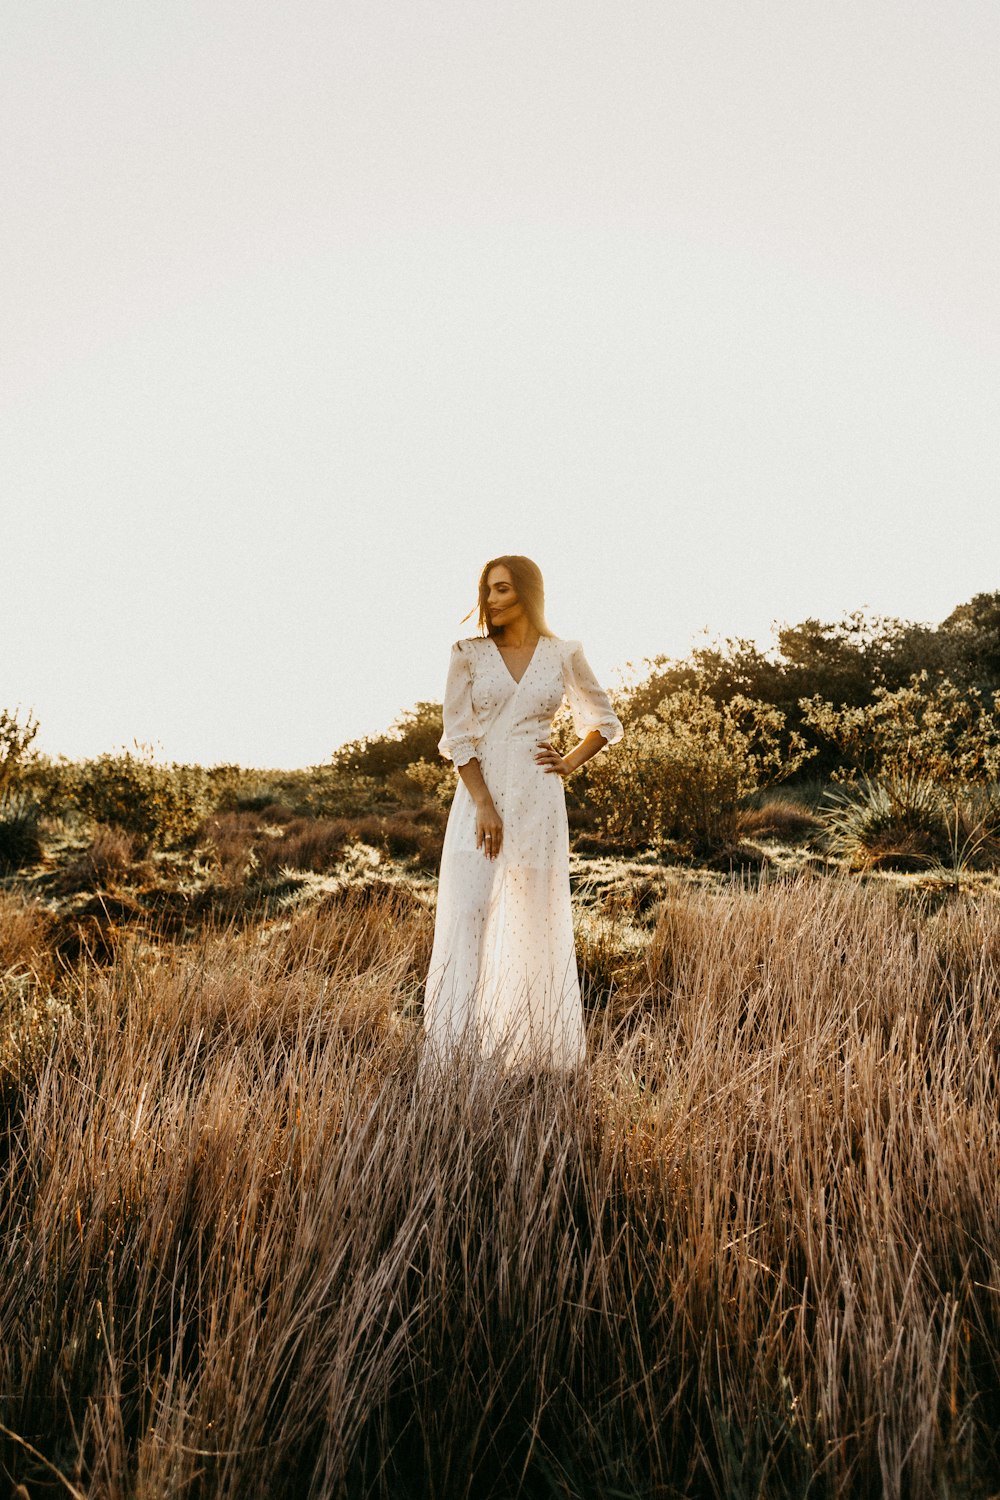 Frau im weißen Kleid tagsüber auf dem Feld